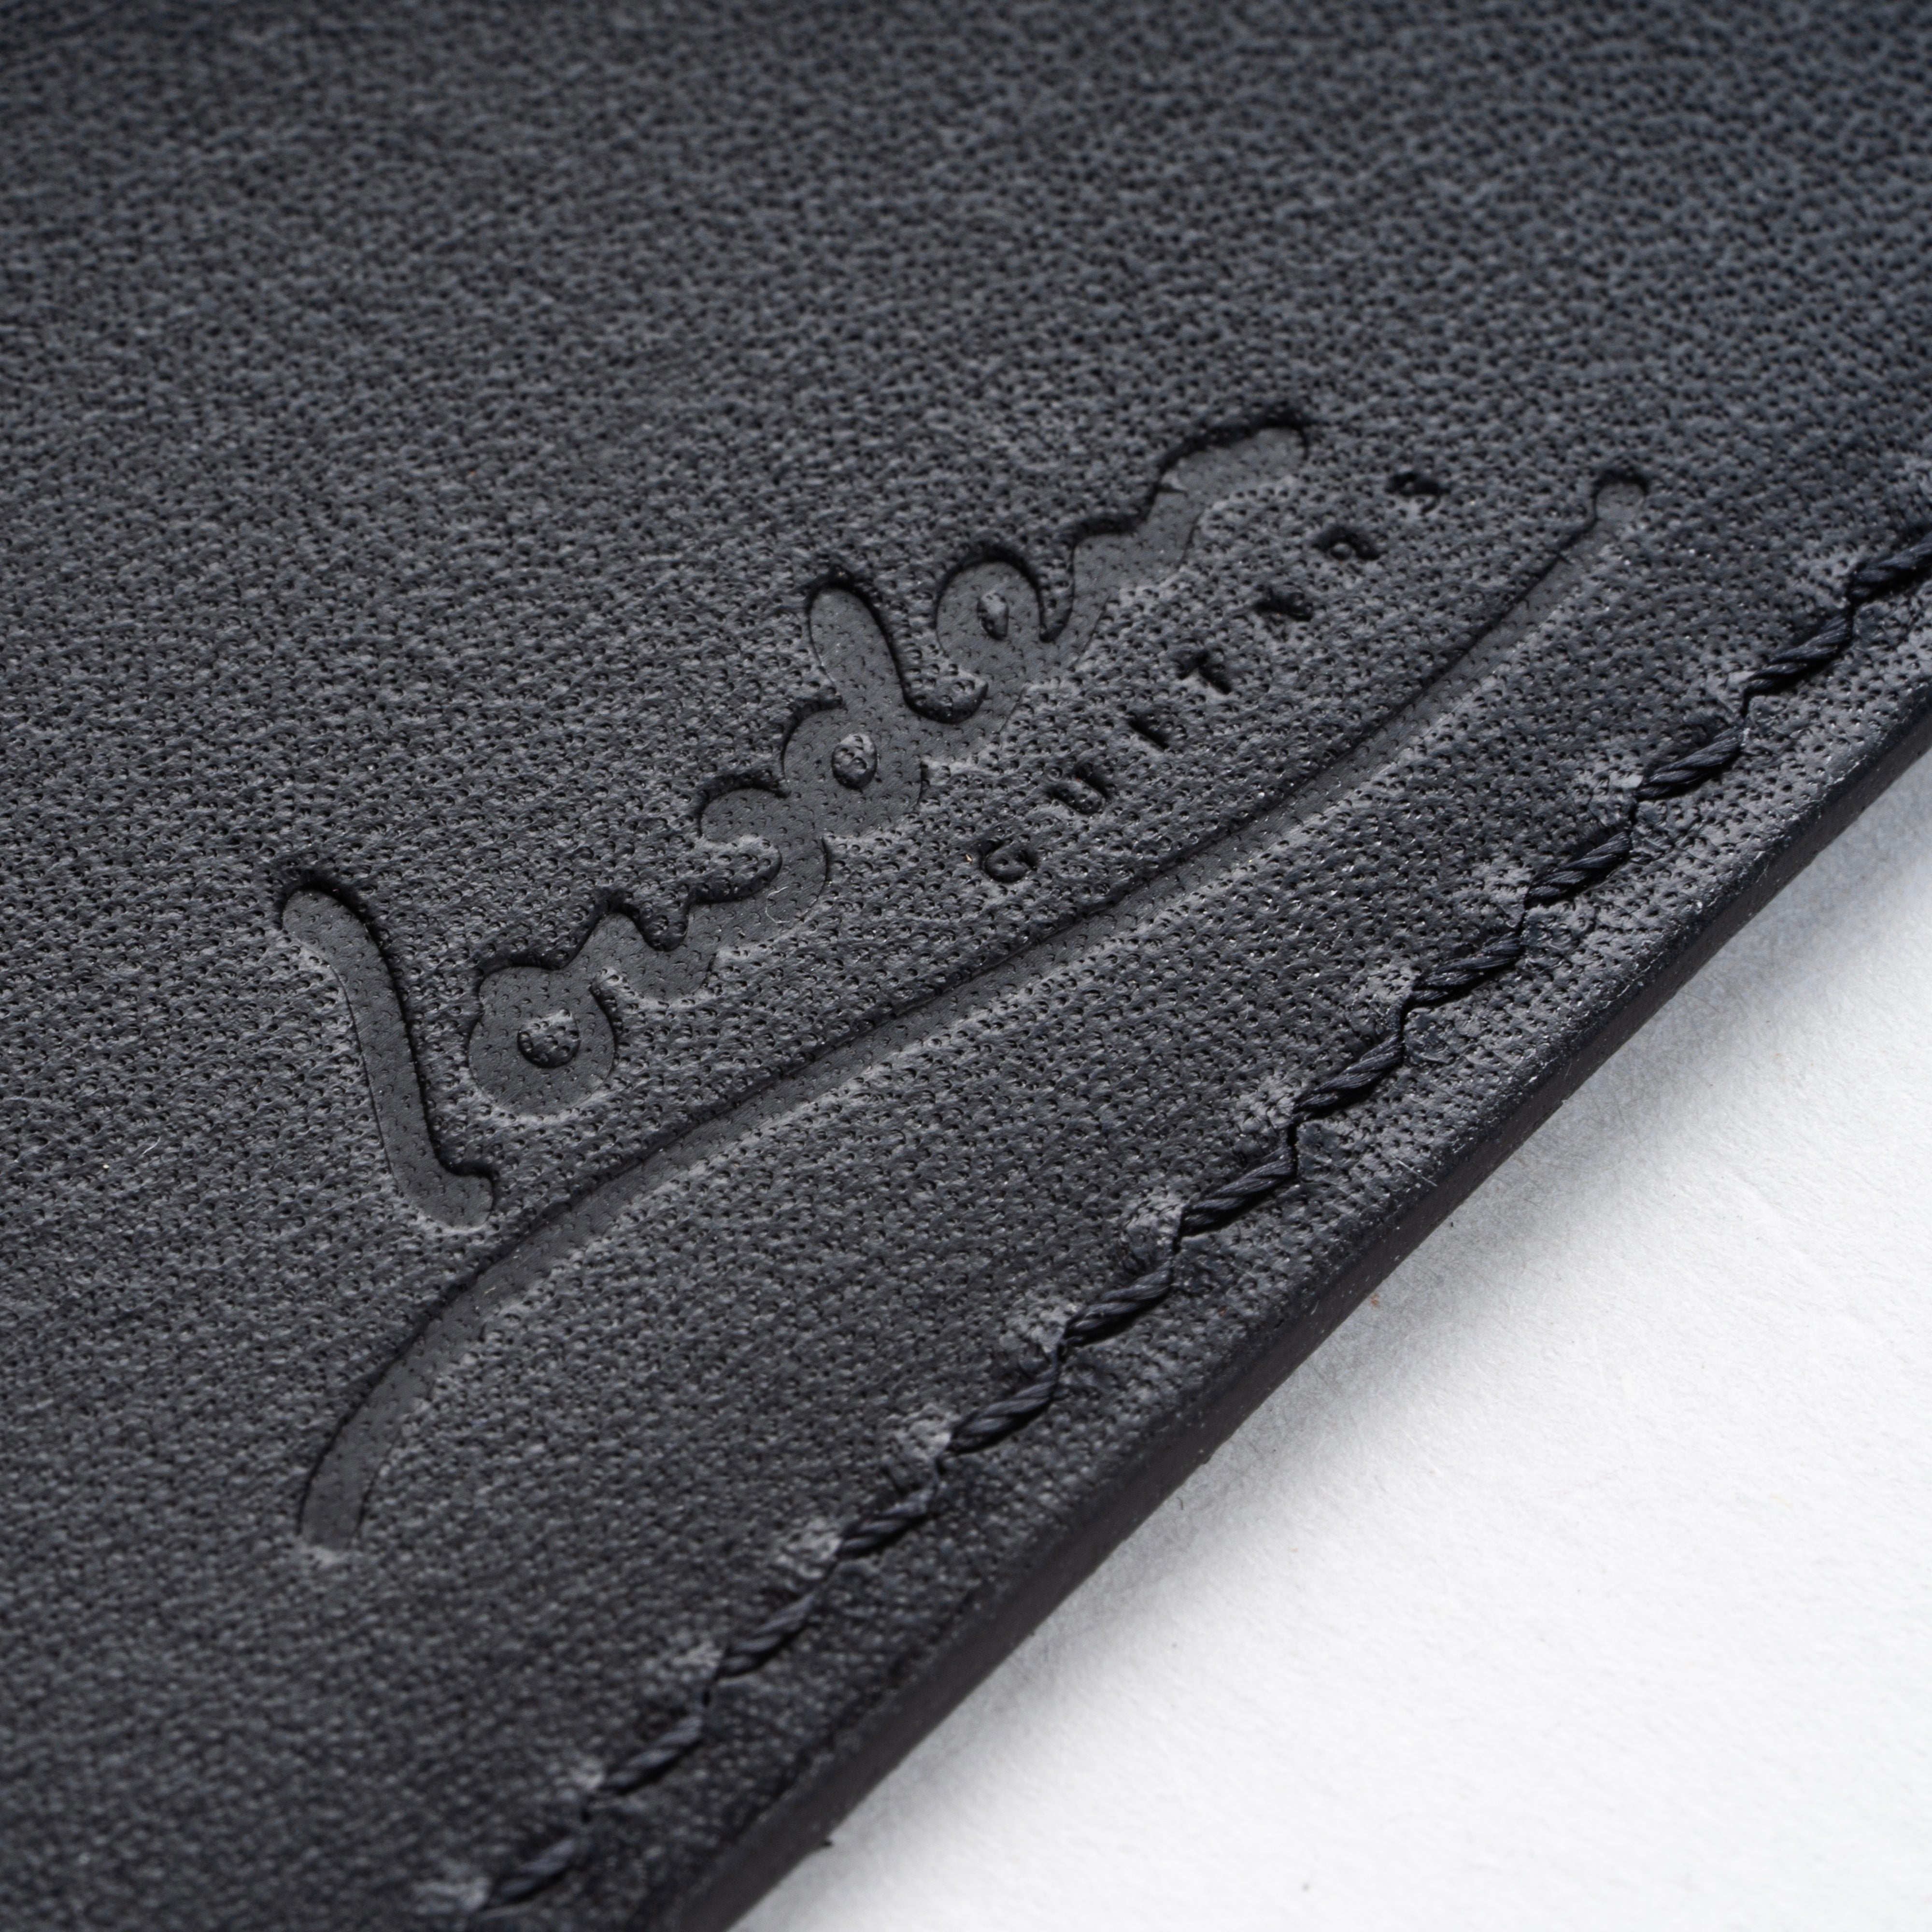 Leather Wallet (black)